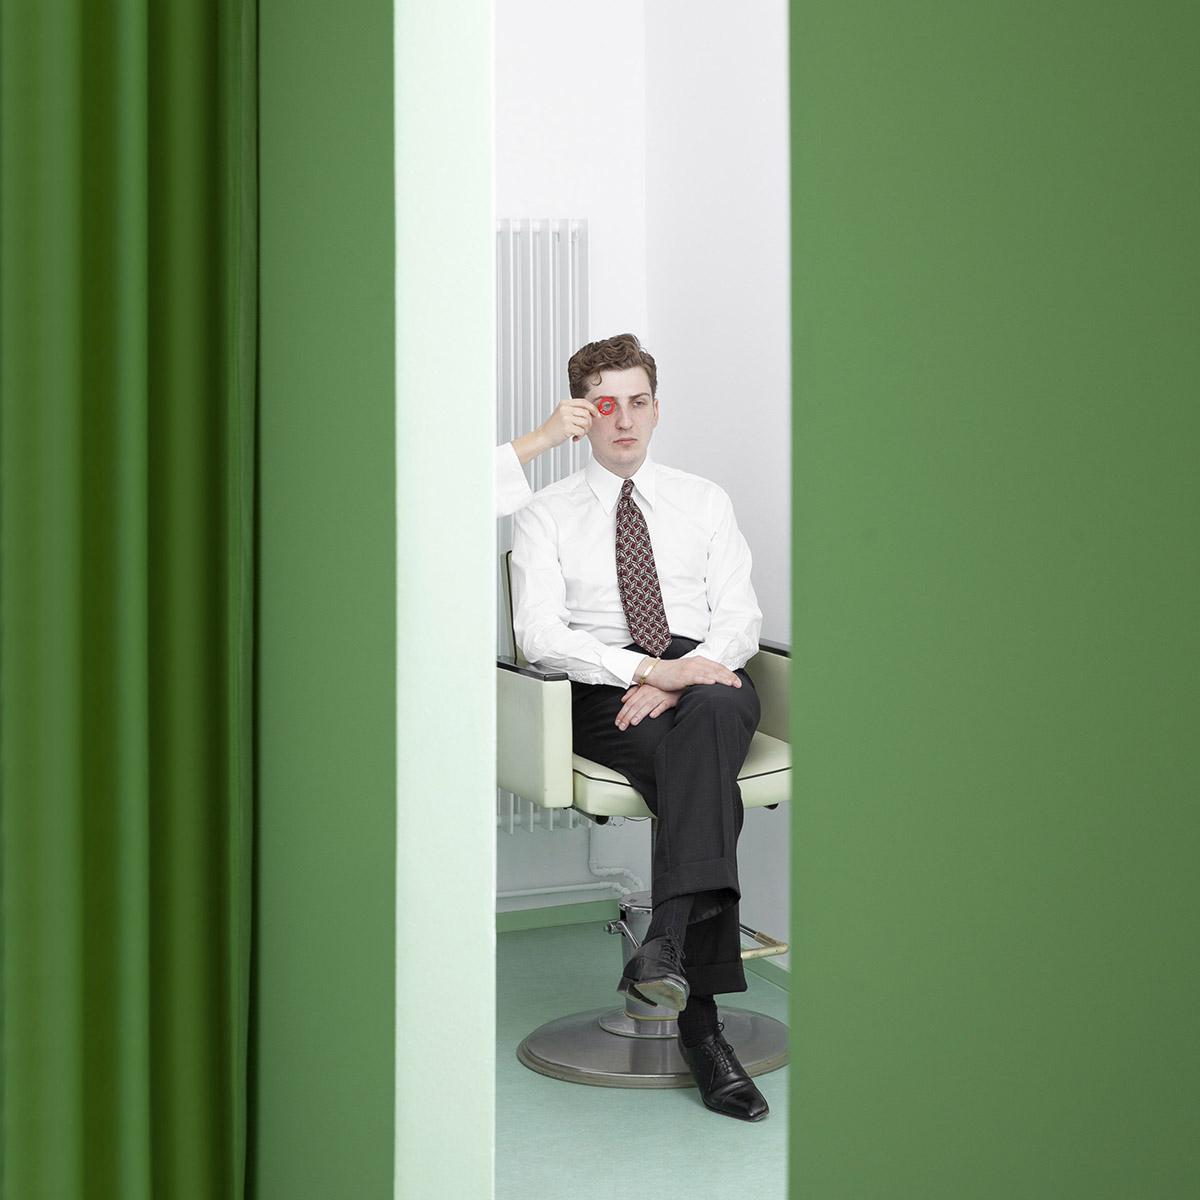 lunettes-selection-berlin-shop-green-interiors-oskar-kohnen-studio_dezeen_sq-2 copia